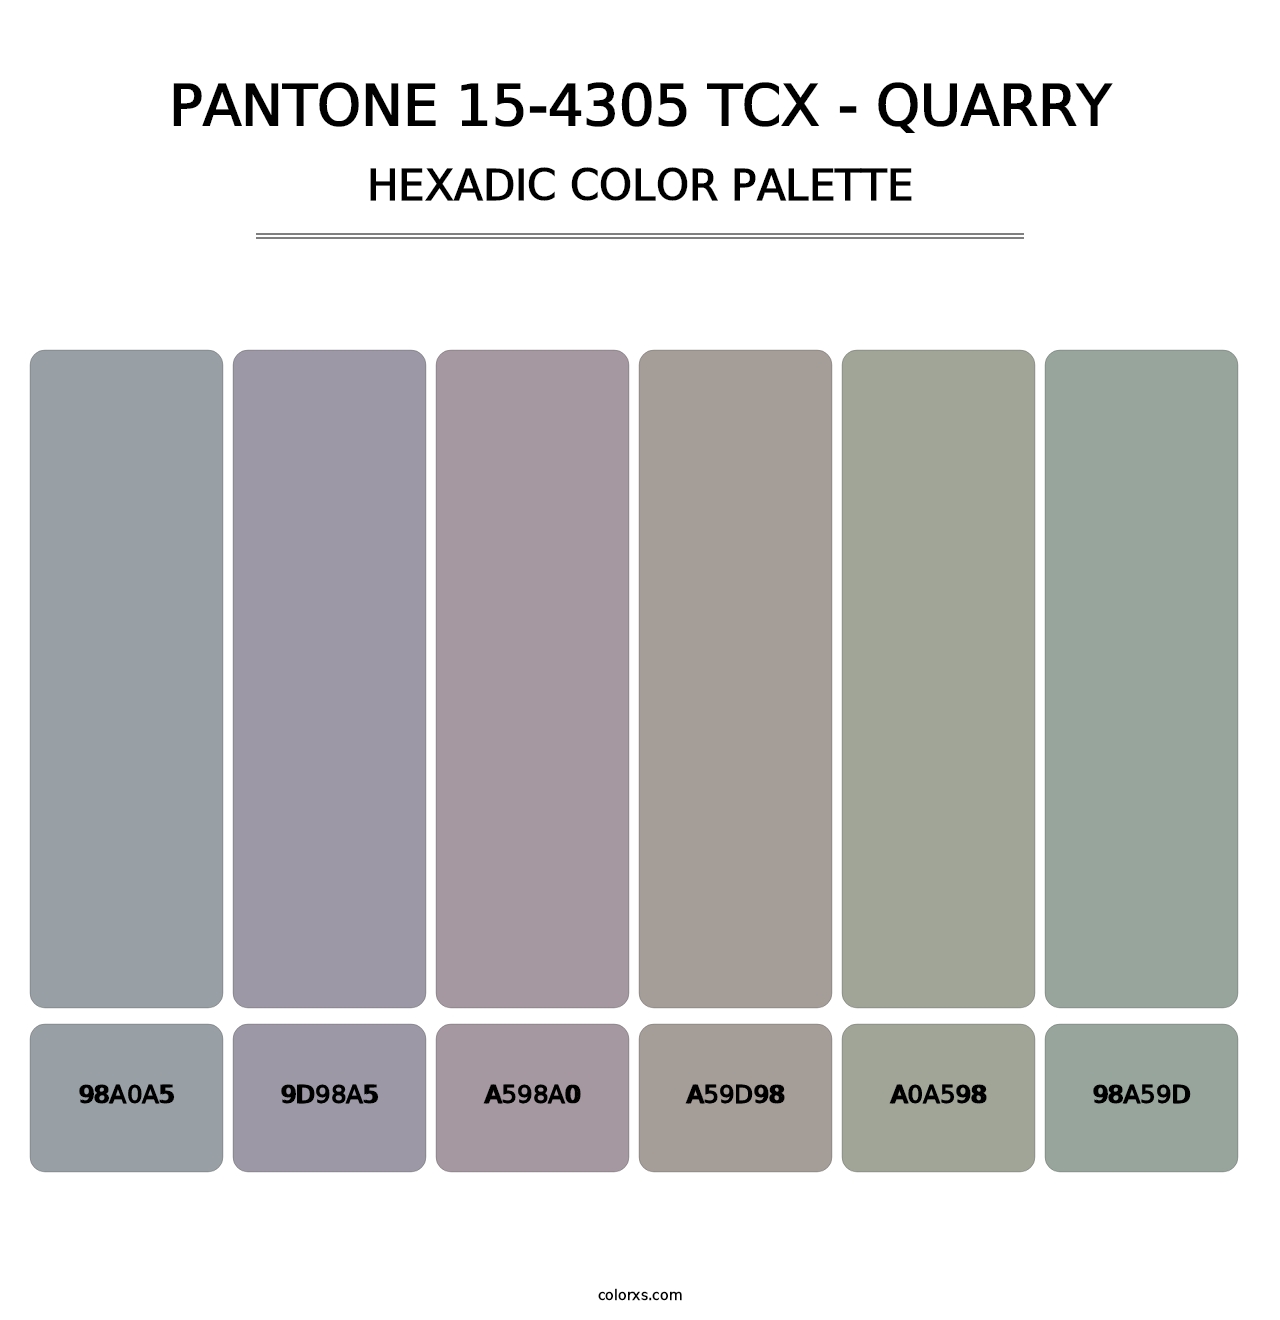 PANTONE 15-4305 TCX - Quarry - Hexadic Color Palette